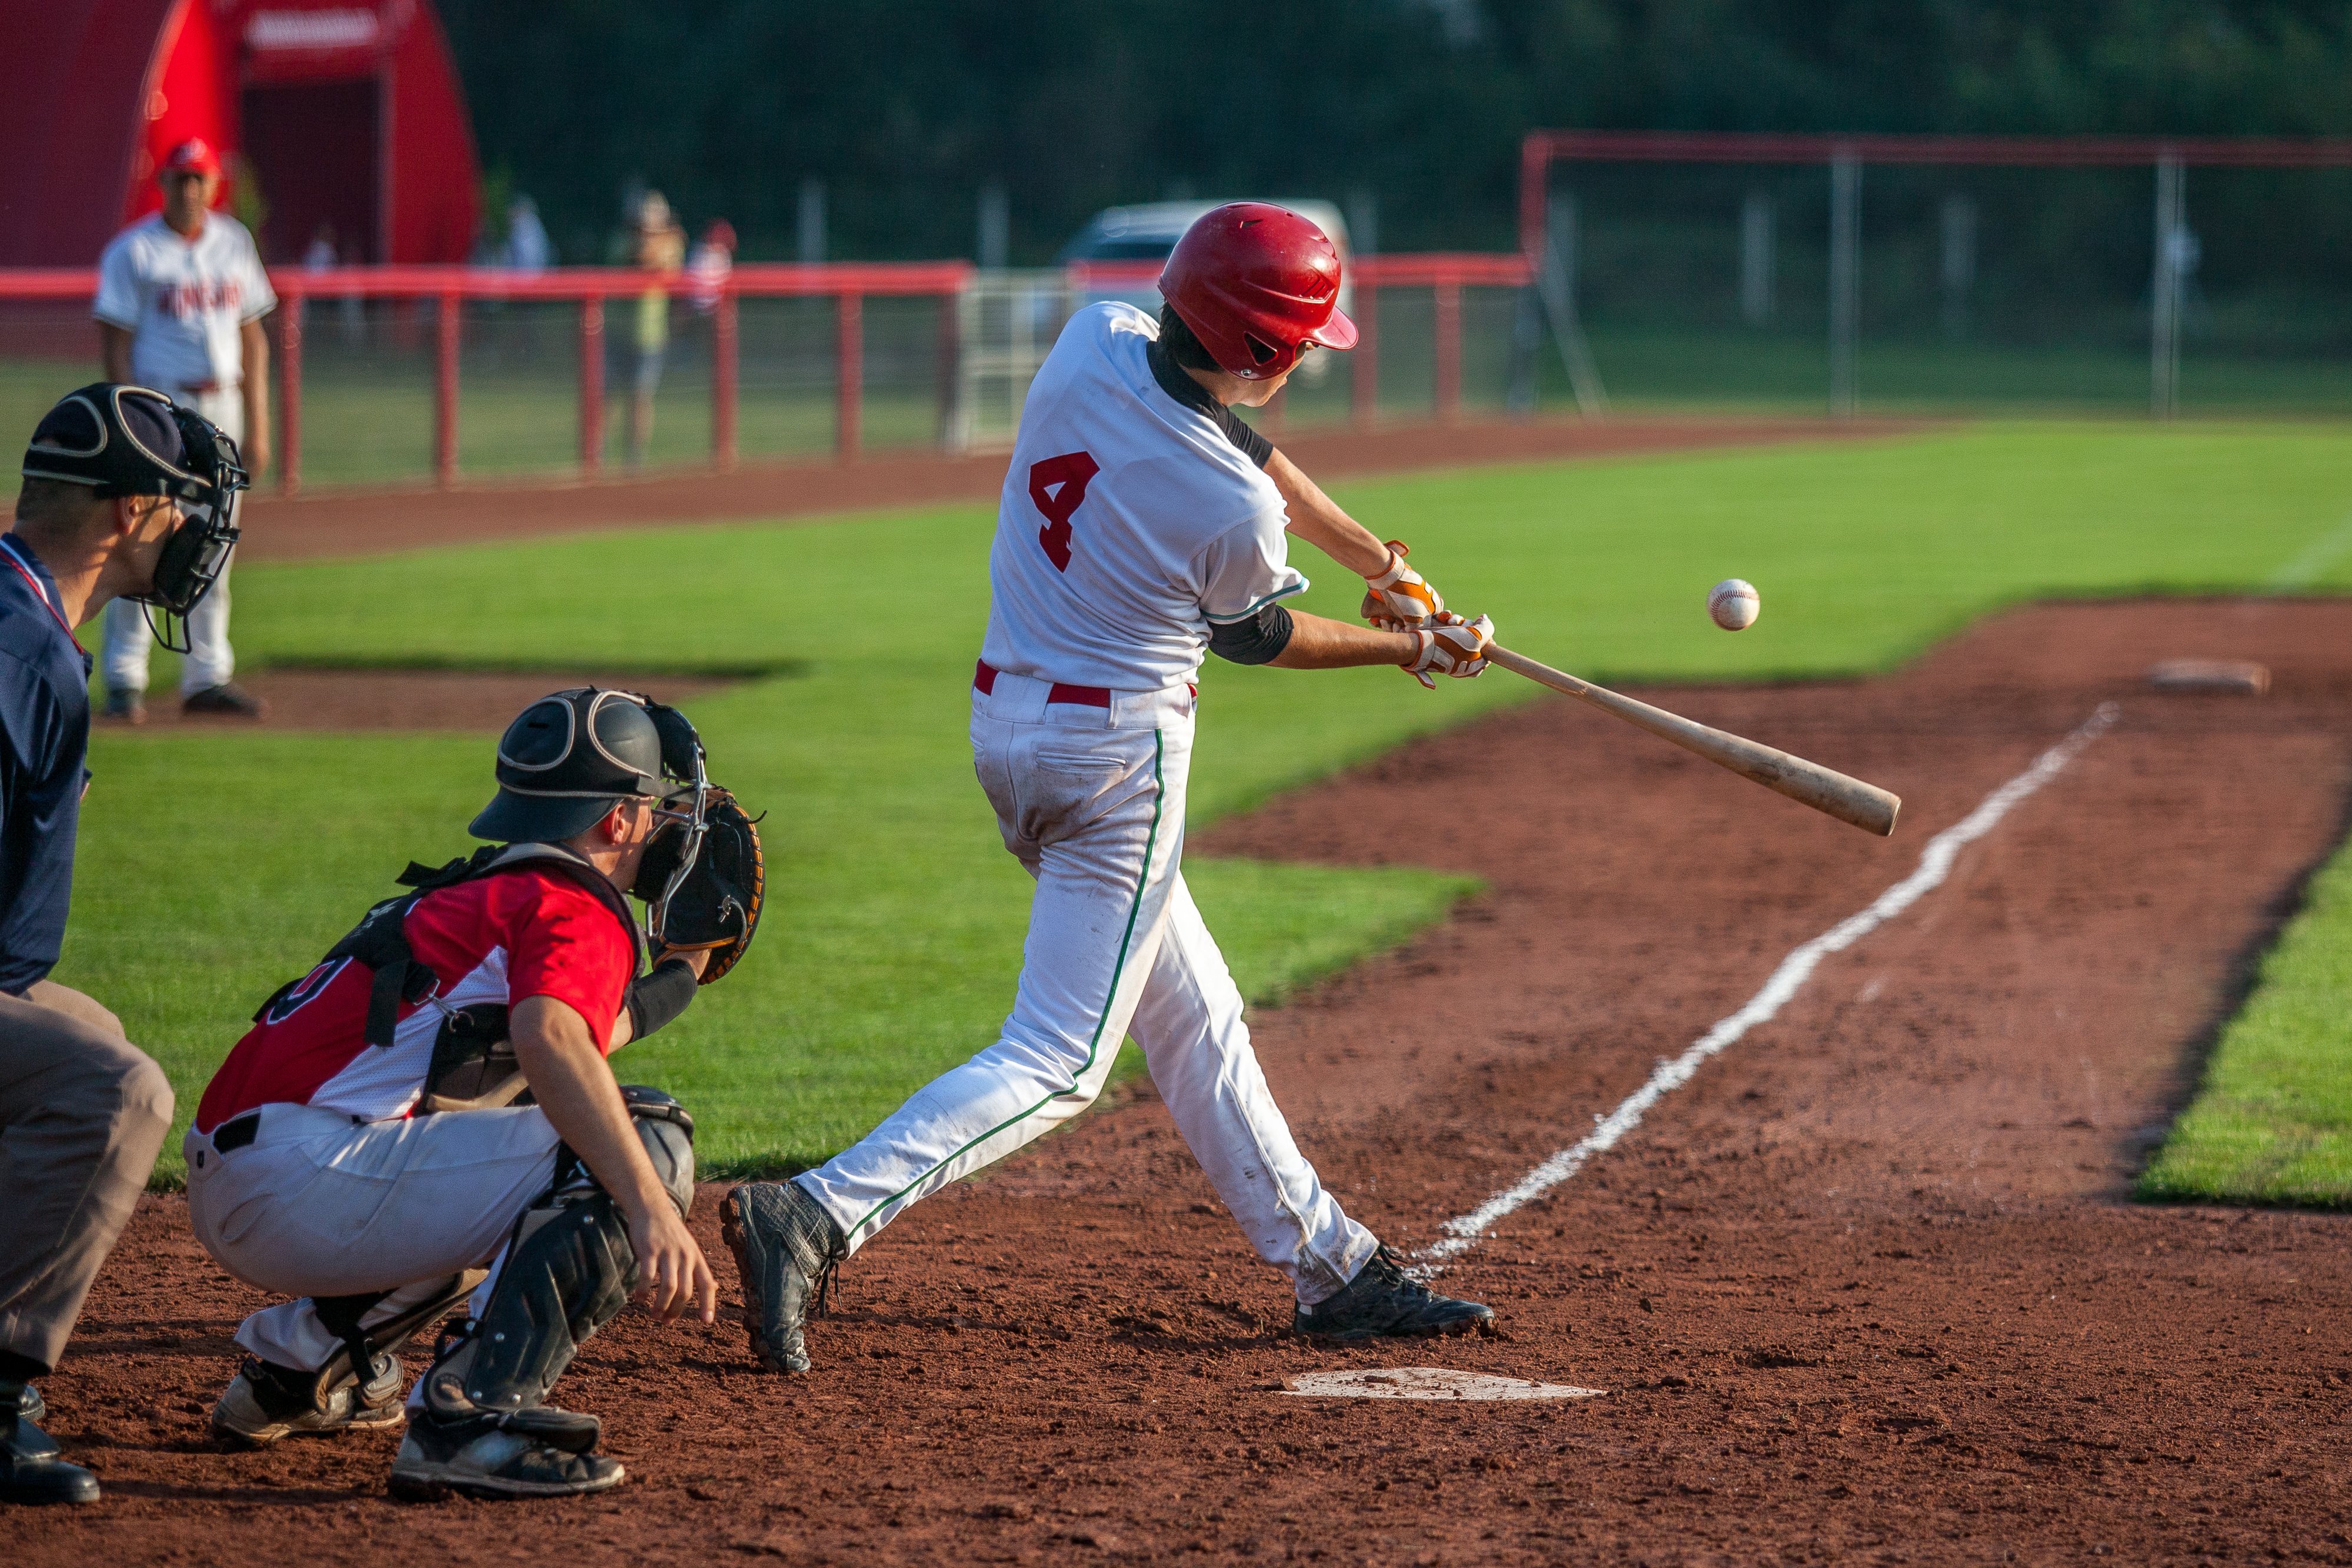 Baseball batter hits the ball | Photo: Shutterstock 